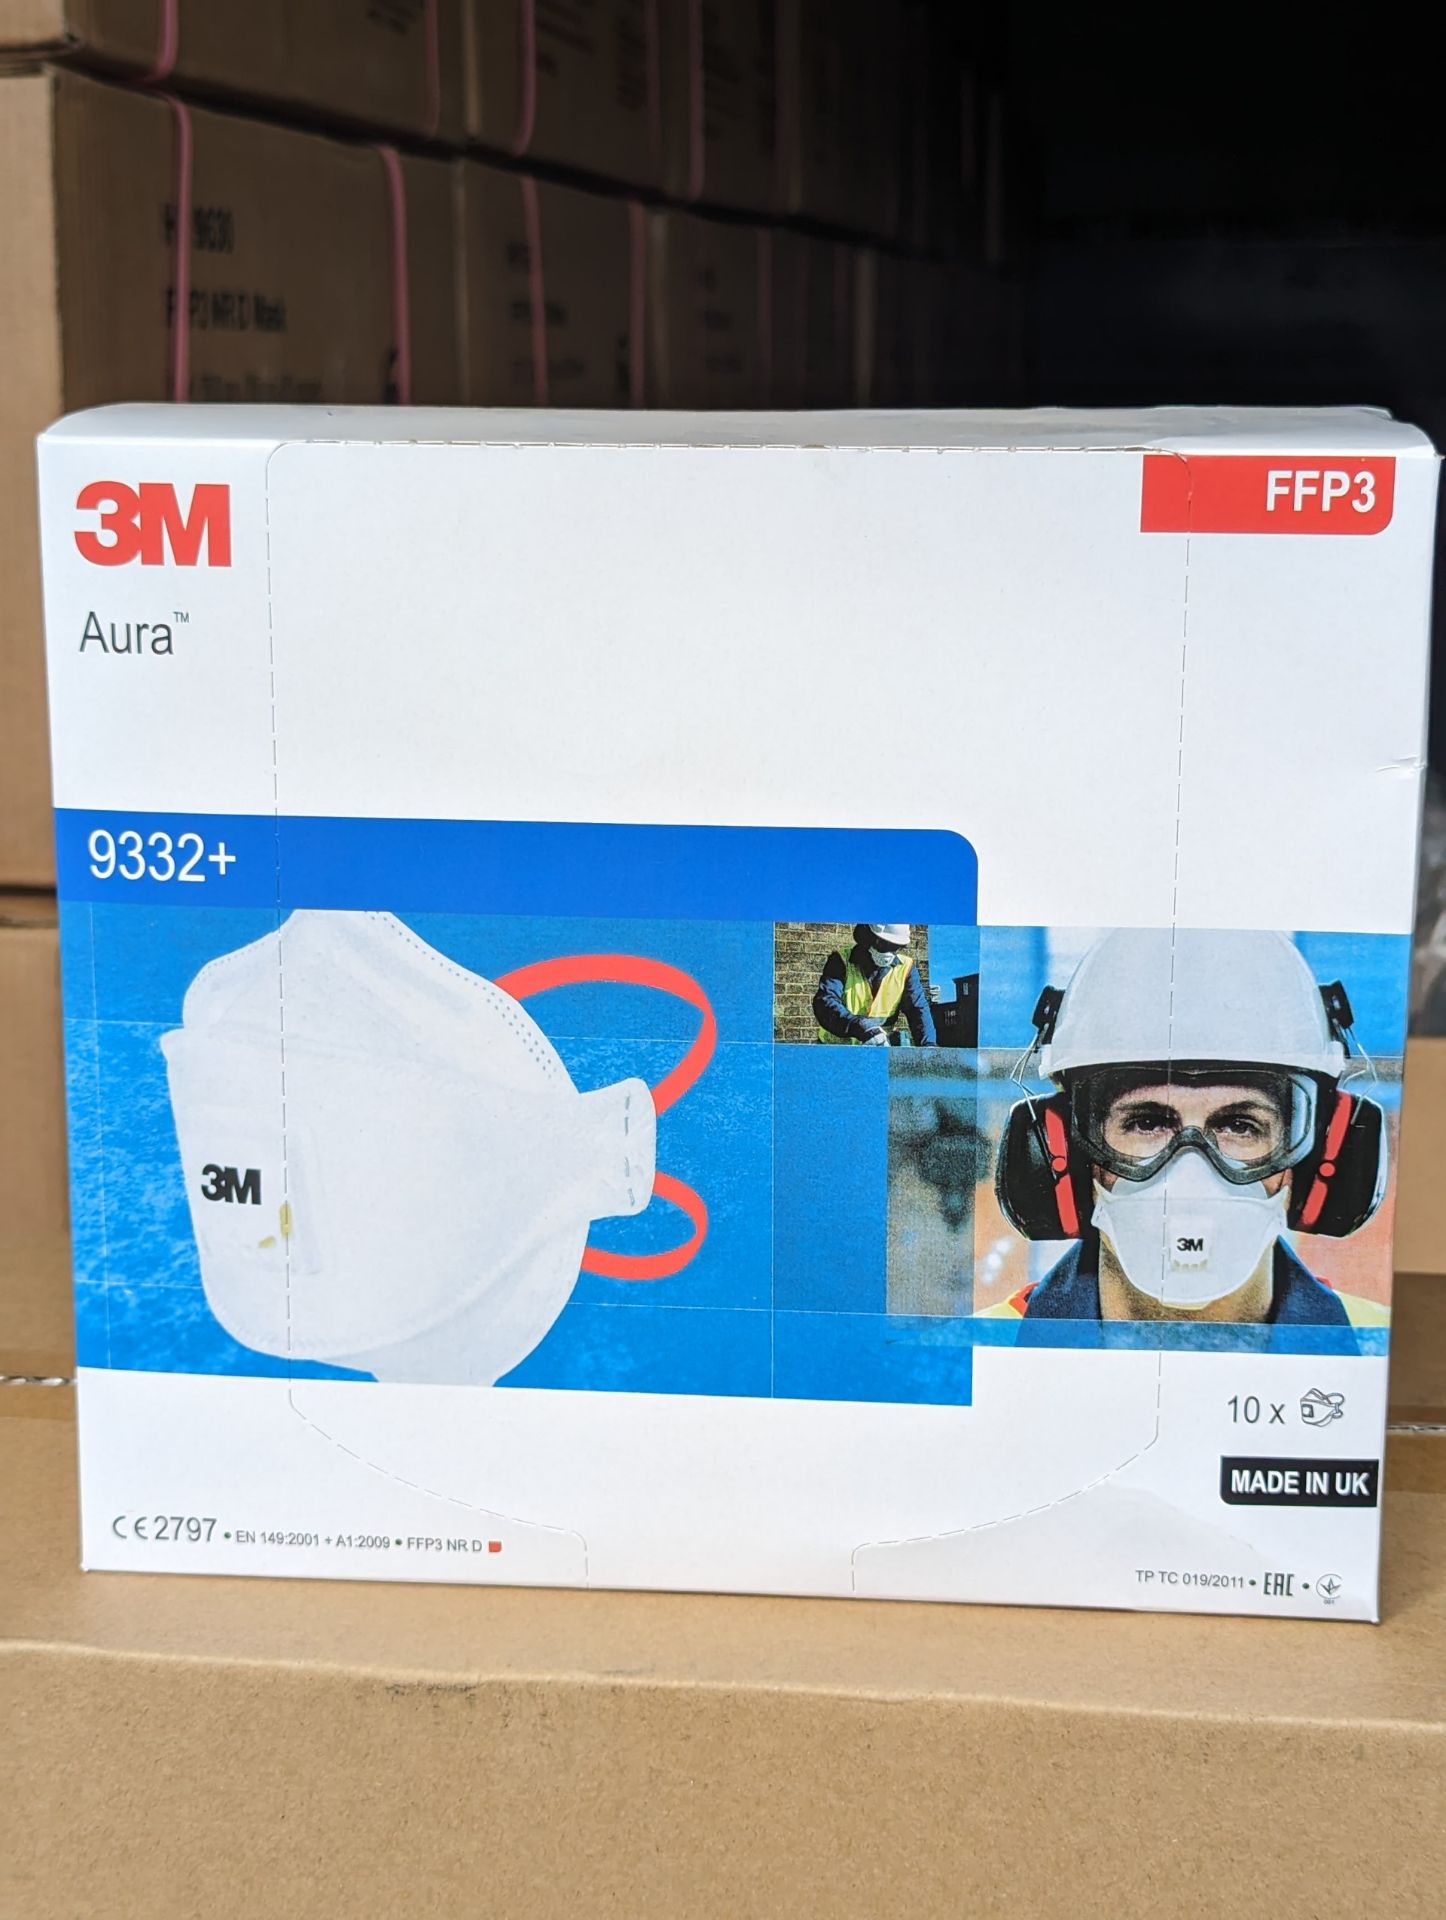 3M Aura FFP3 9332+ dust mask box of 120 units - Image 2 of 8